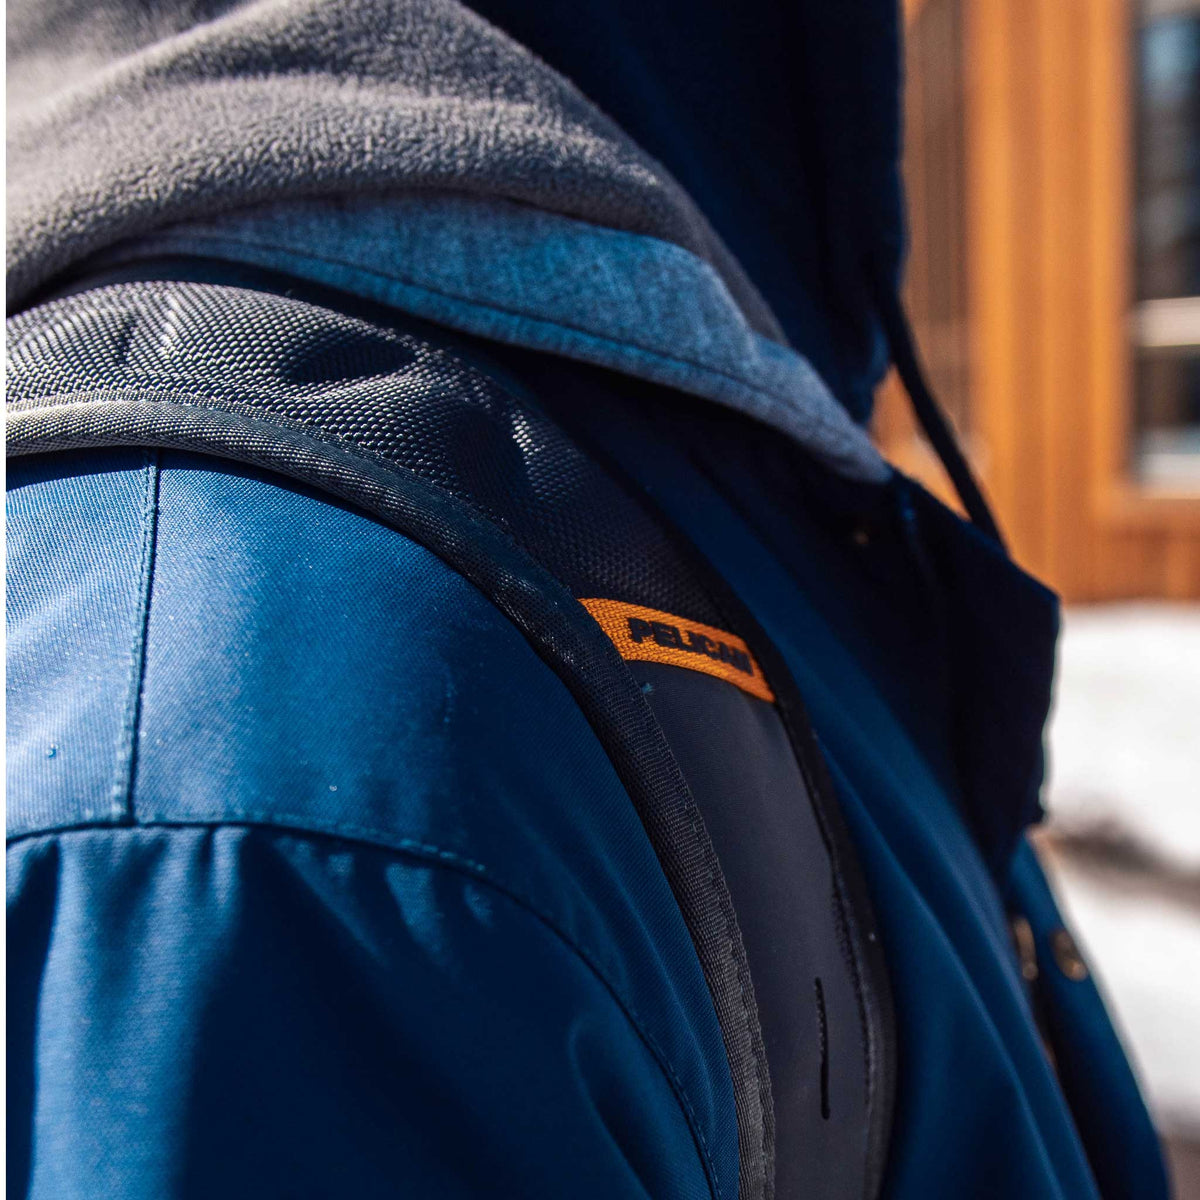 Pelican™ MPB35 Backpack detailed application shot of the shoulder straps